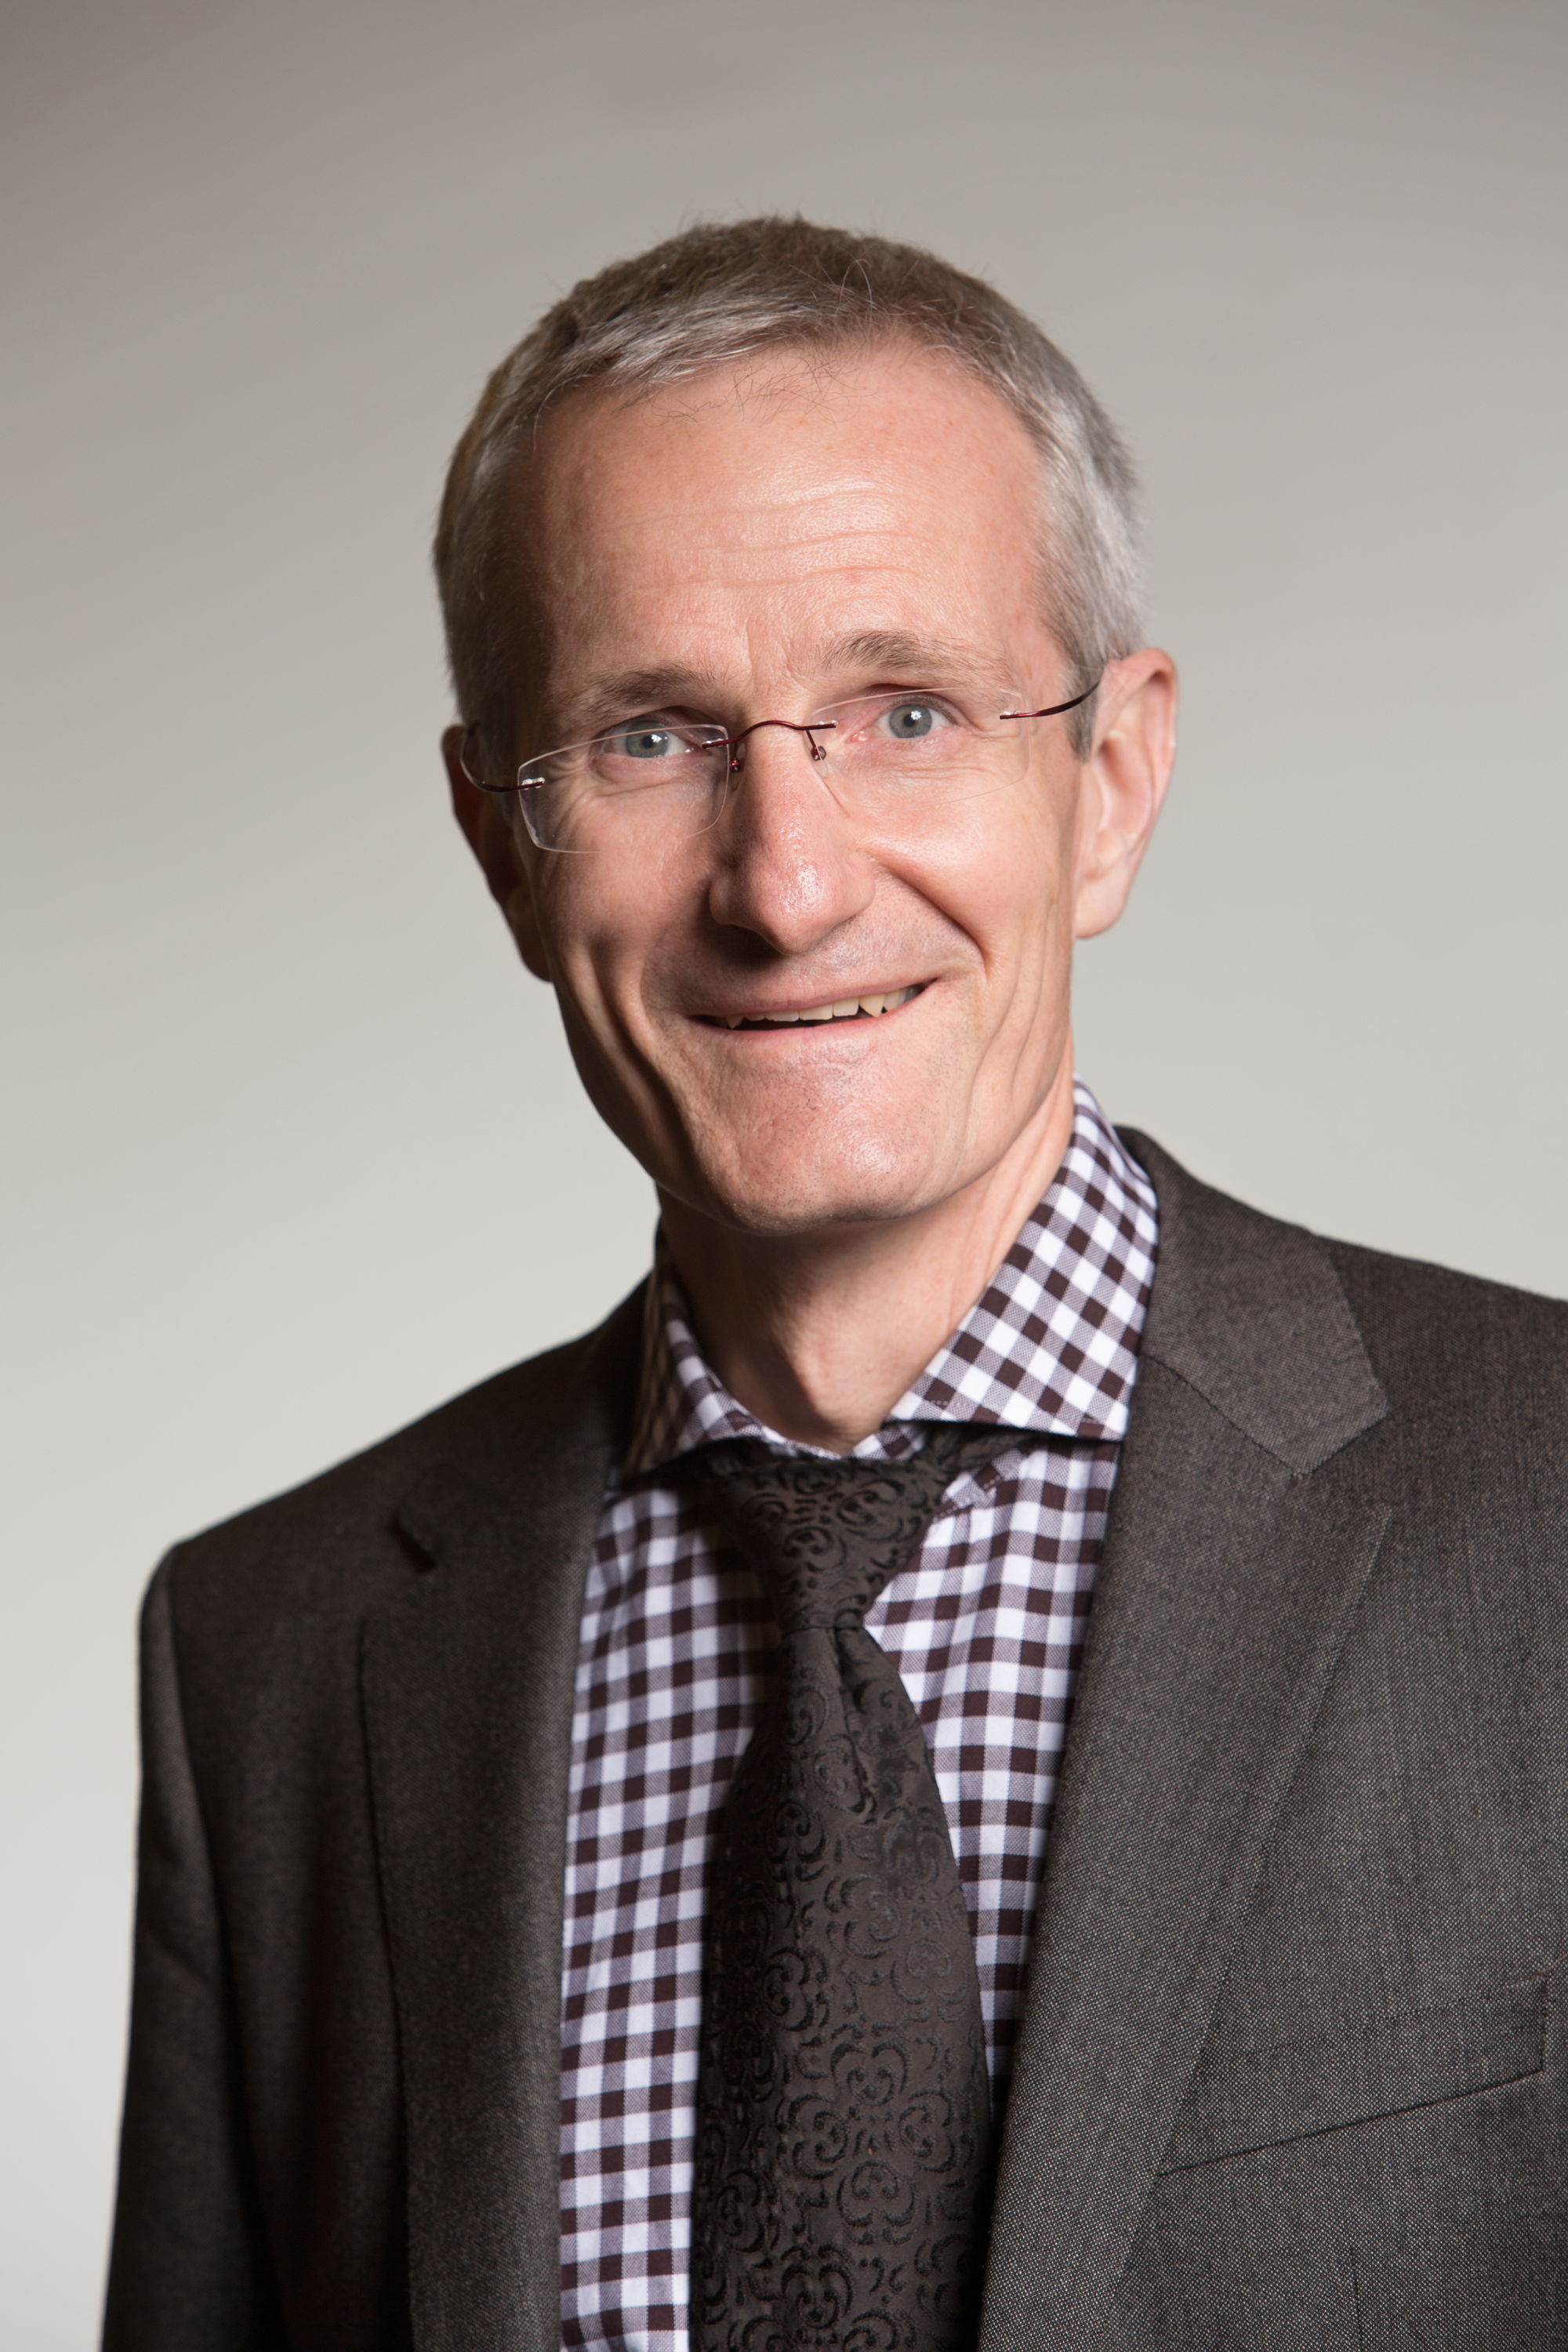 Prof. Dr. med. Martin Brutsche, Chief Physician of the Lung Center, Cantonal Hospital St. Gallen (KSSG)